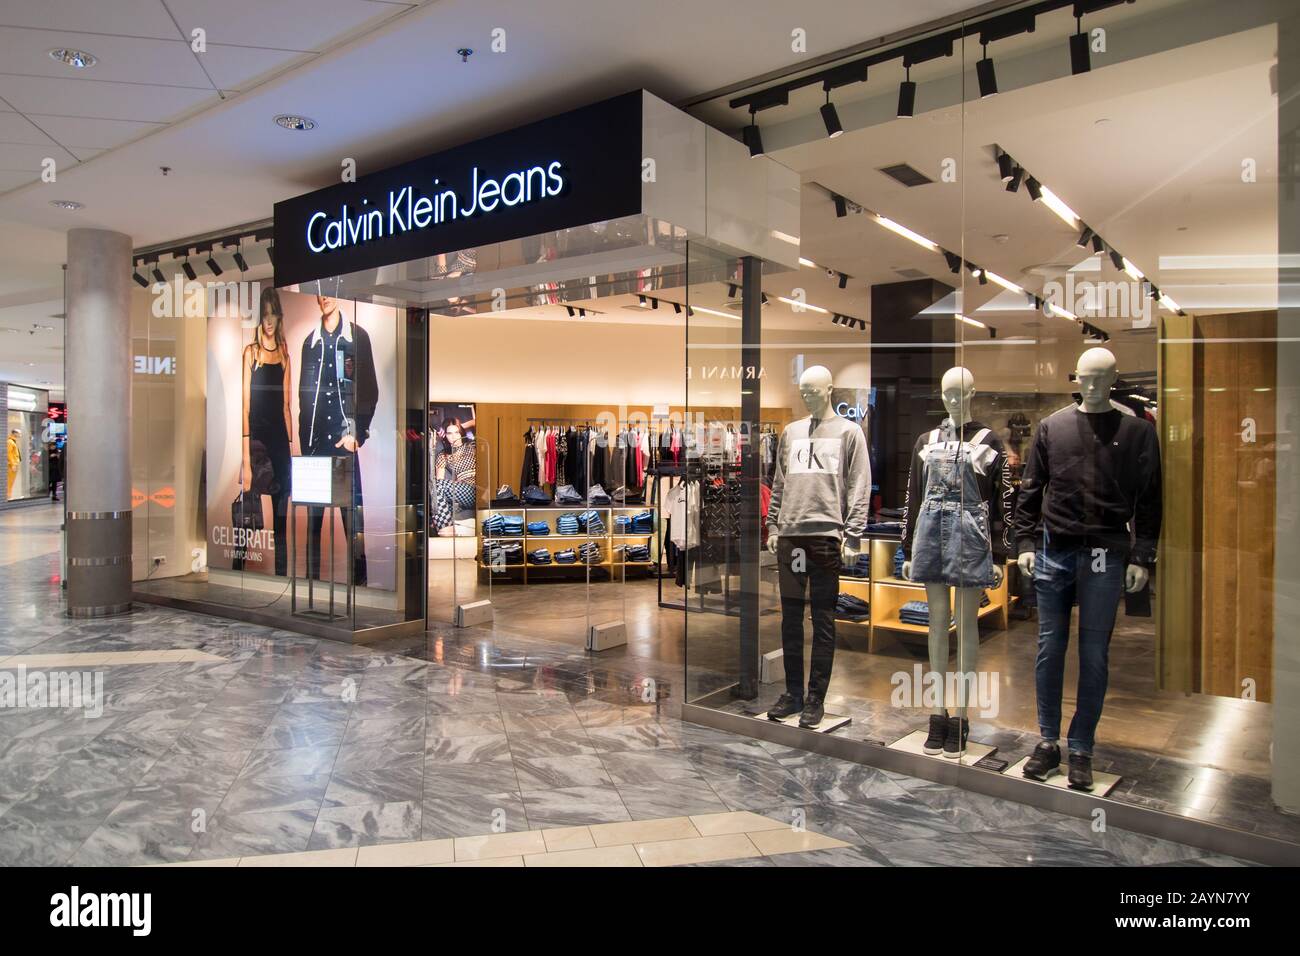 beet Moedig aan straal Calvin Klein Jeans shop facade in Tallinn, Estonia, 9.2.2020 Stock Photo -  Alamy